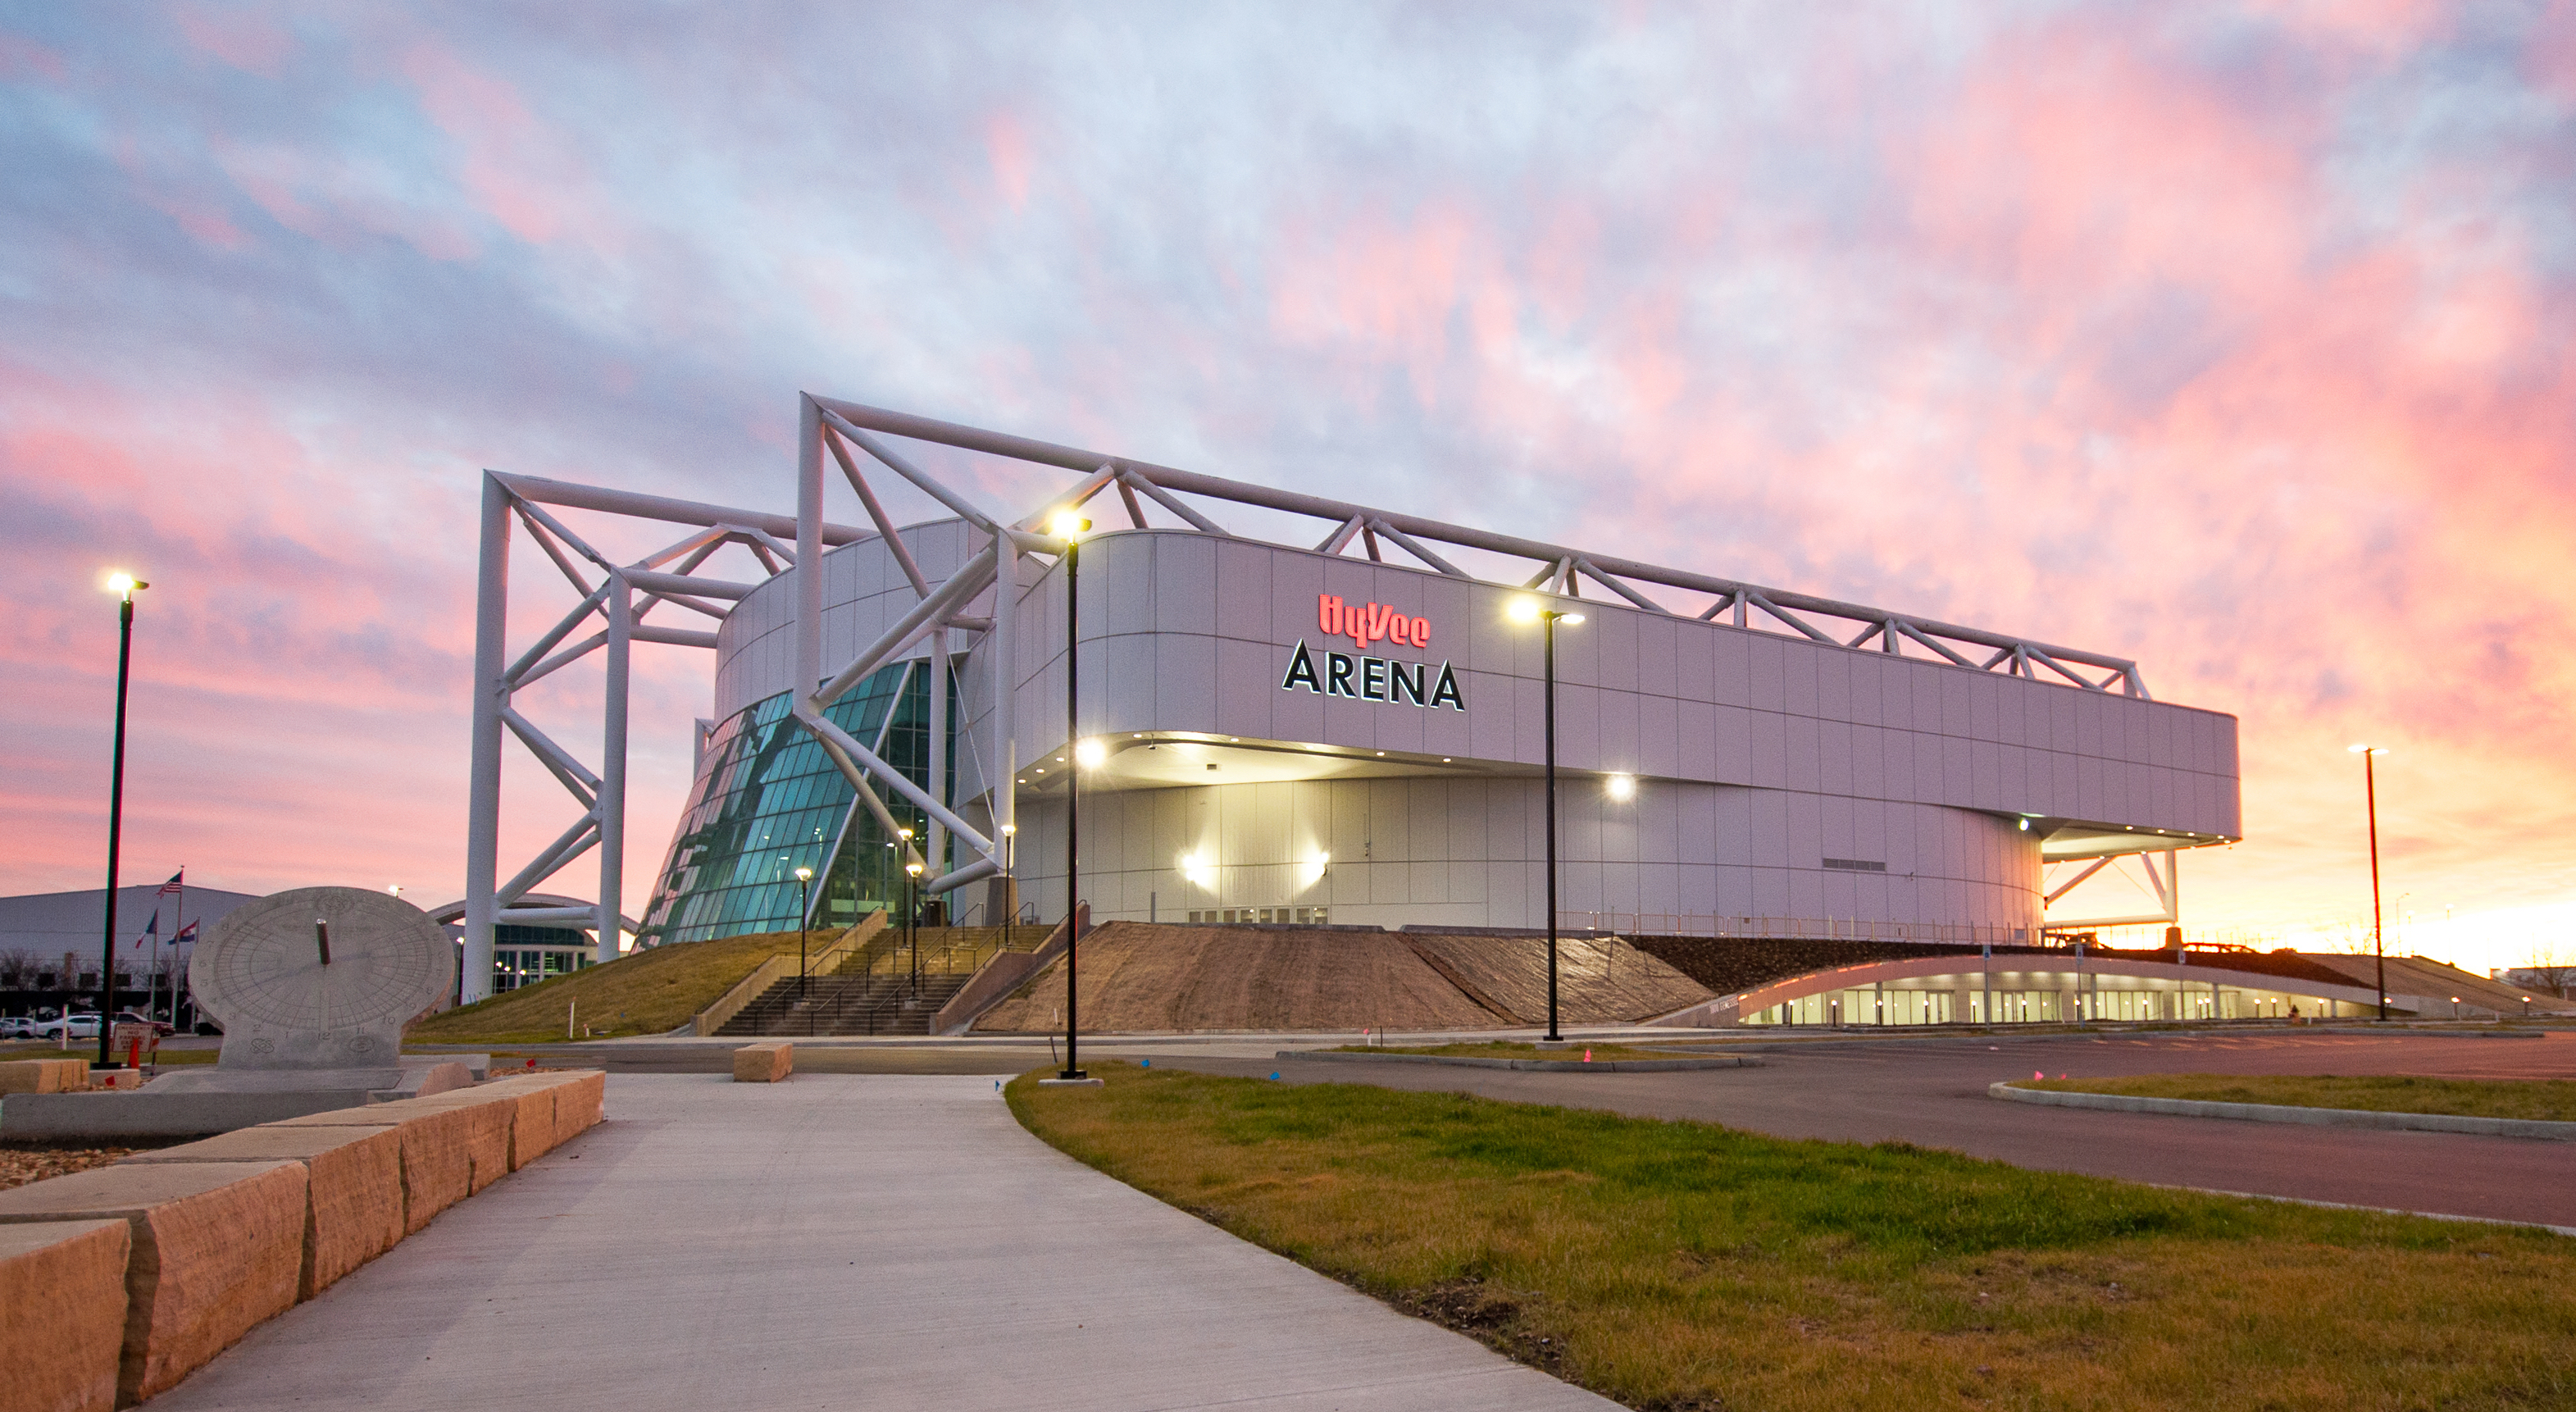 Hyvee Arena